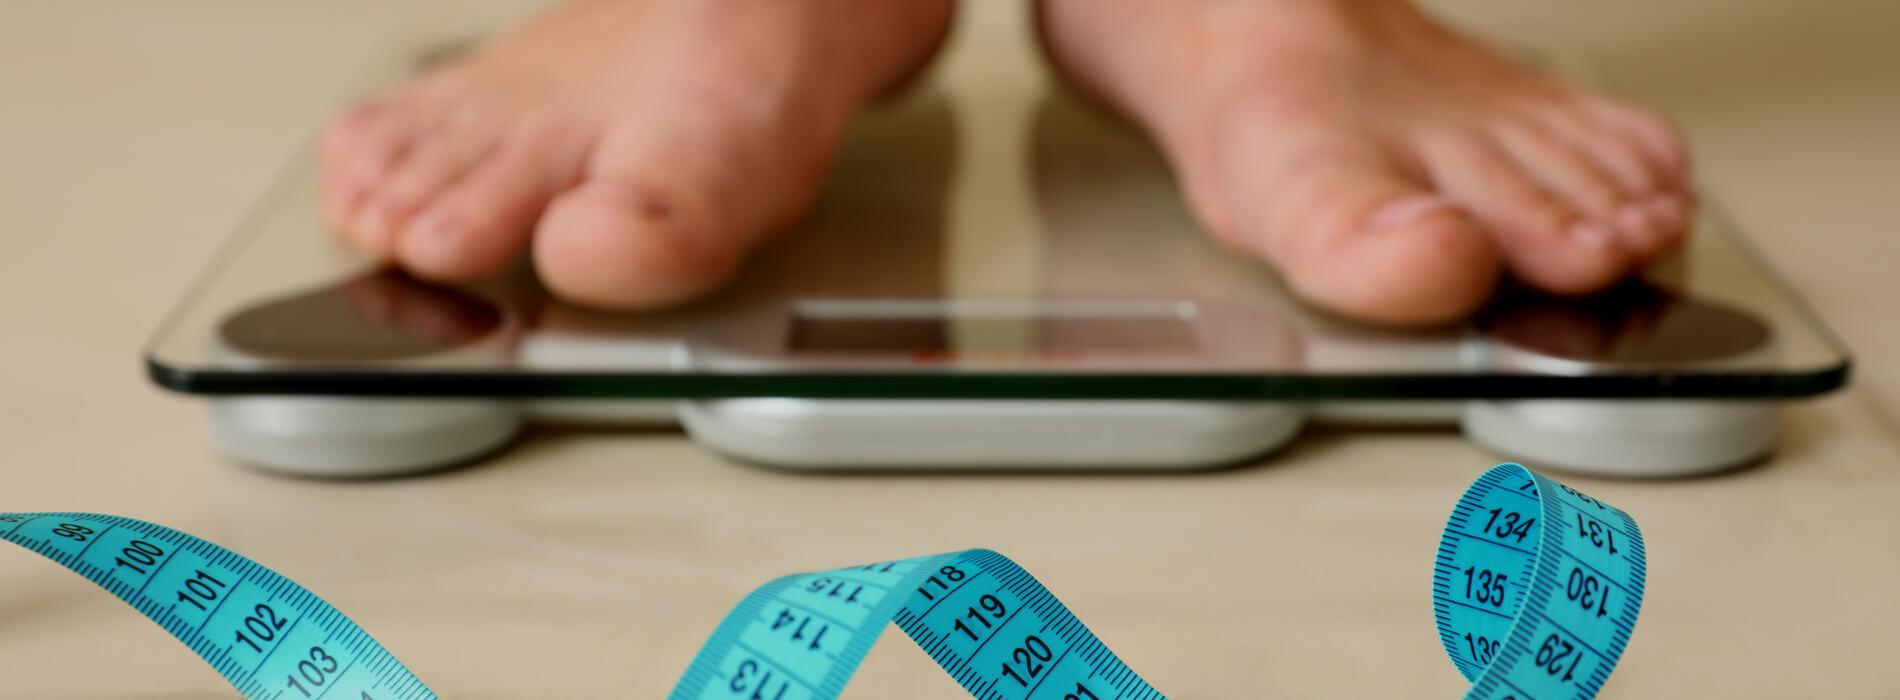 Dieta DNA - bezpieczny sposób na utratę wagi